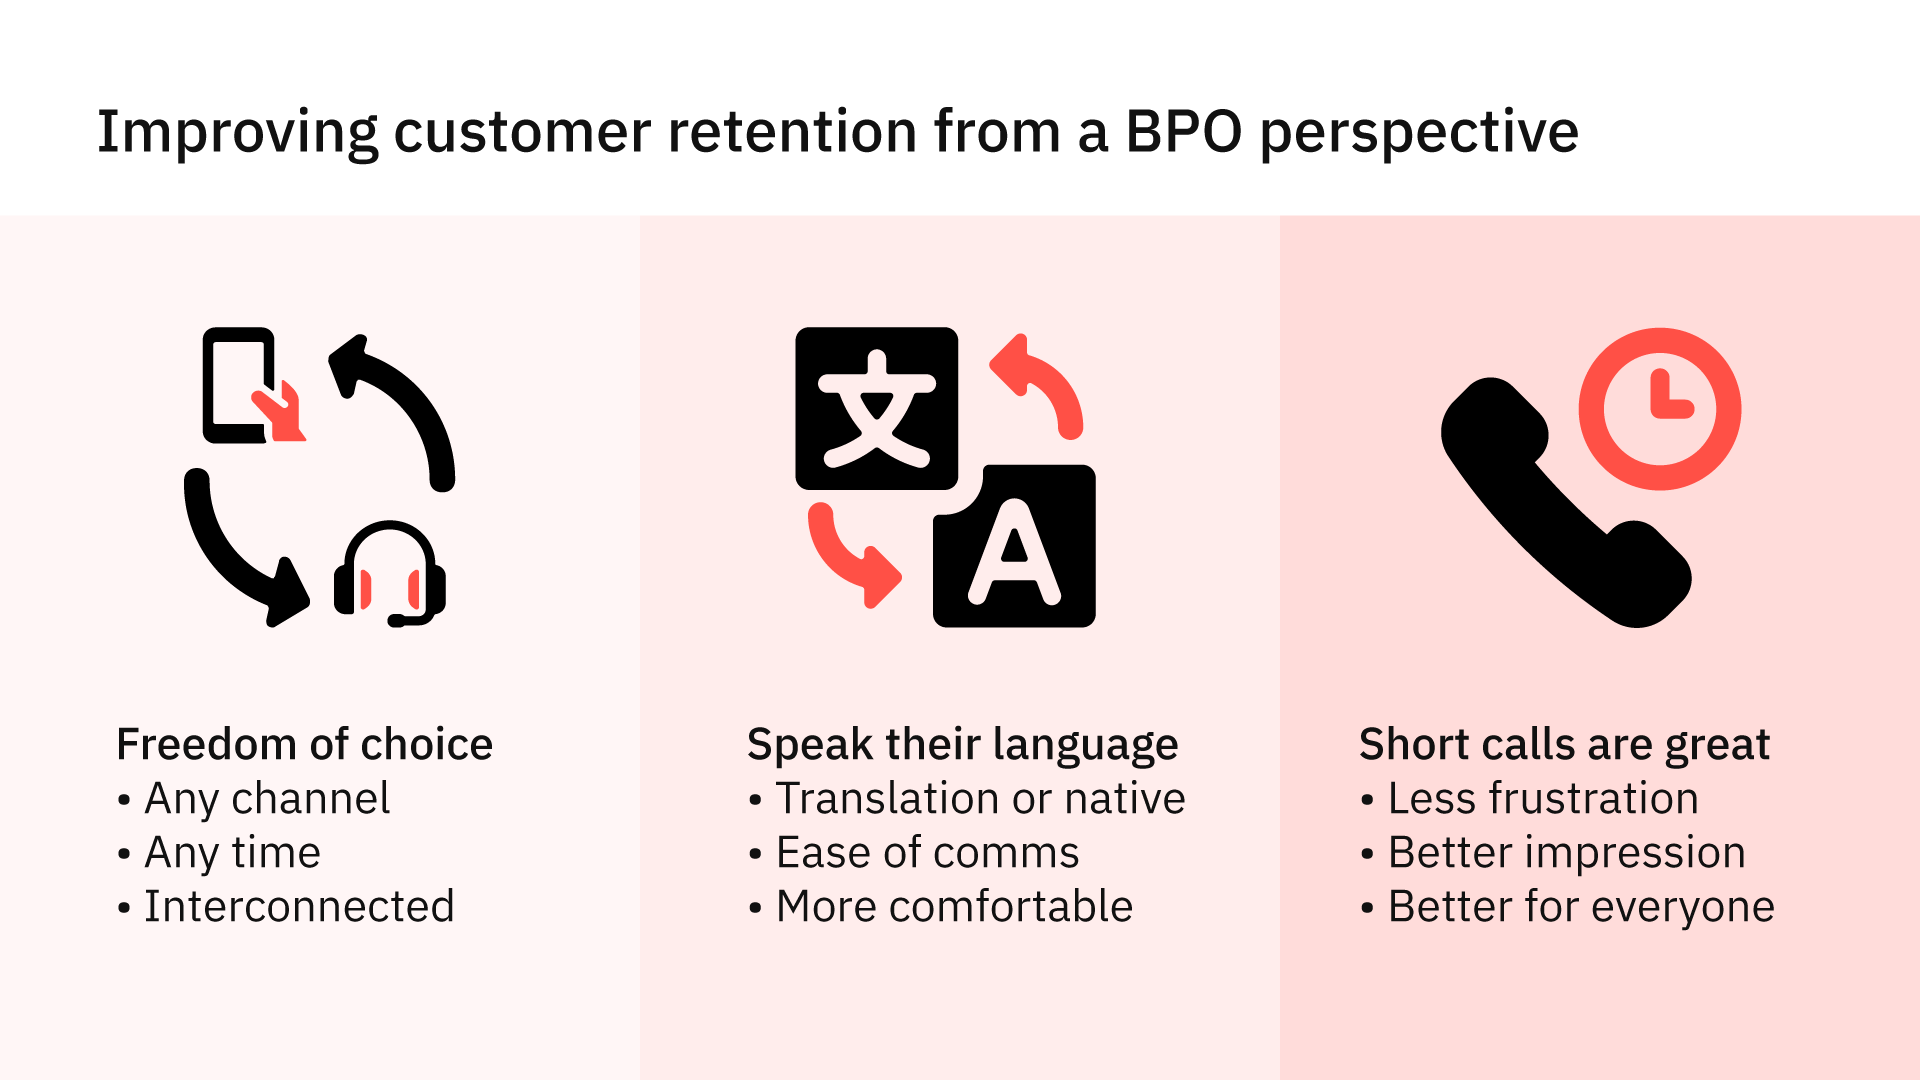 Improving customer retention through a BPO perspective.